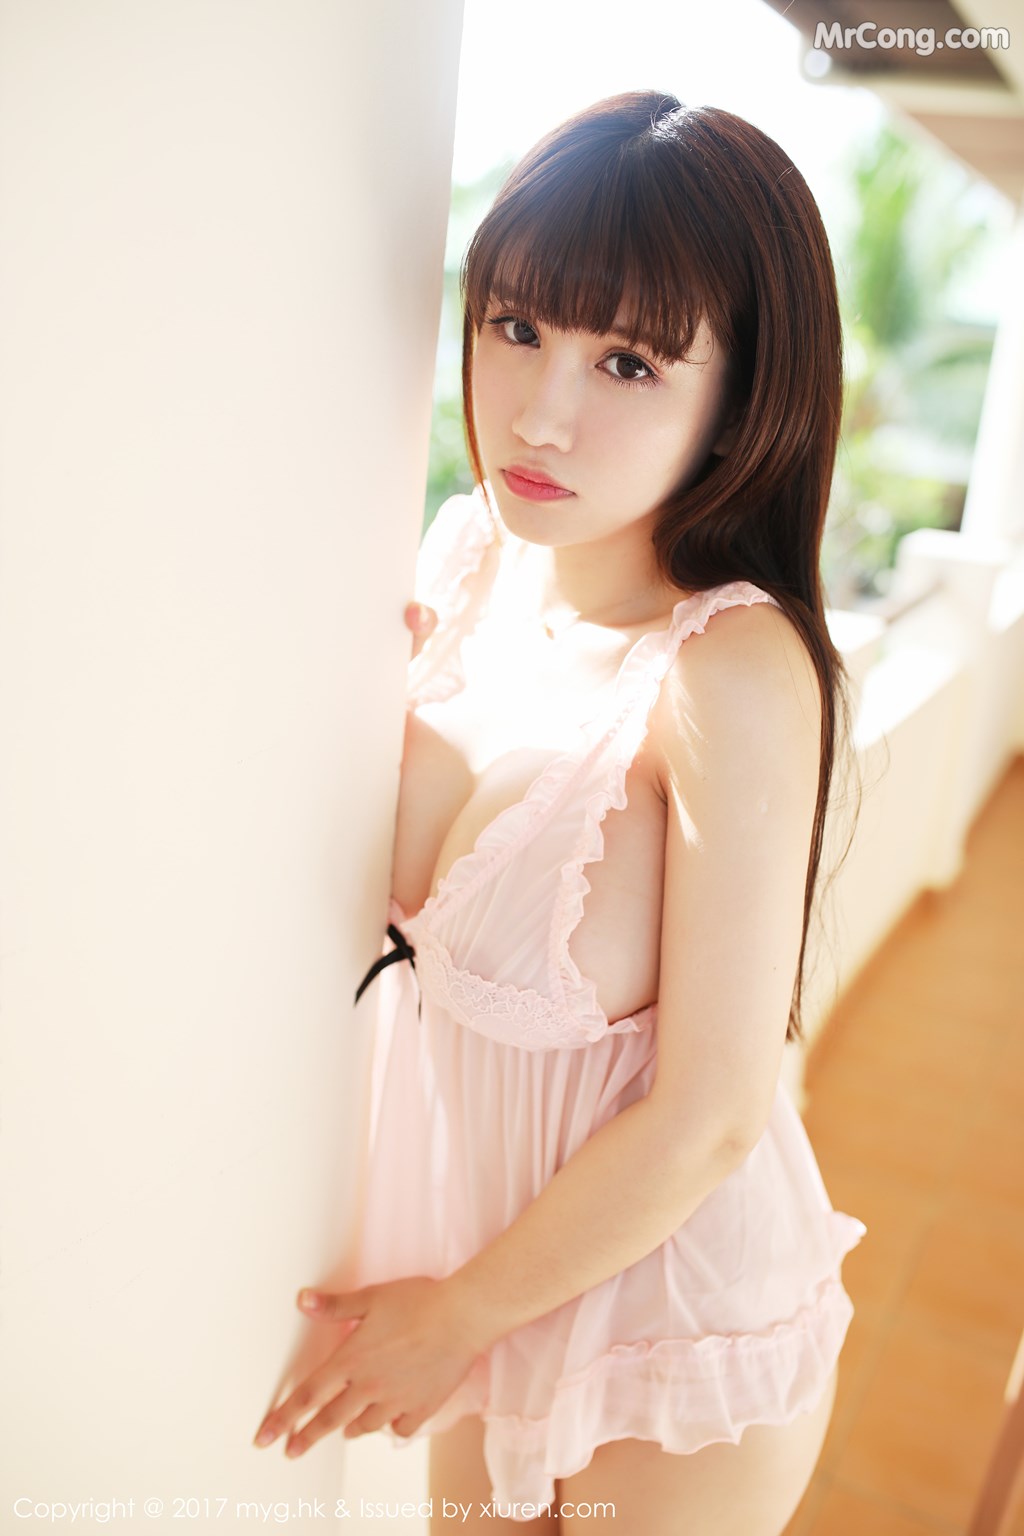 MyGirl Vol.265: Model Aojiao Meng Meng (K8 傲 娇 萌萌 Vivian) (41 photos)